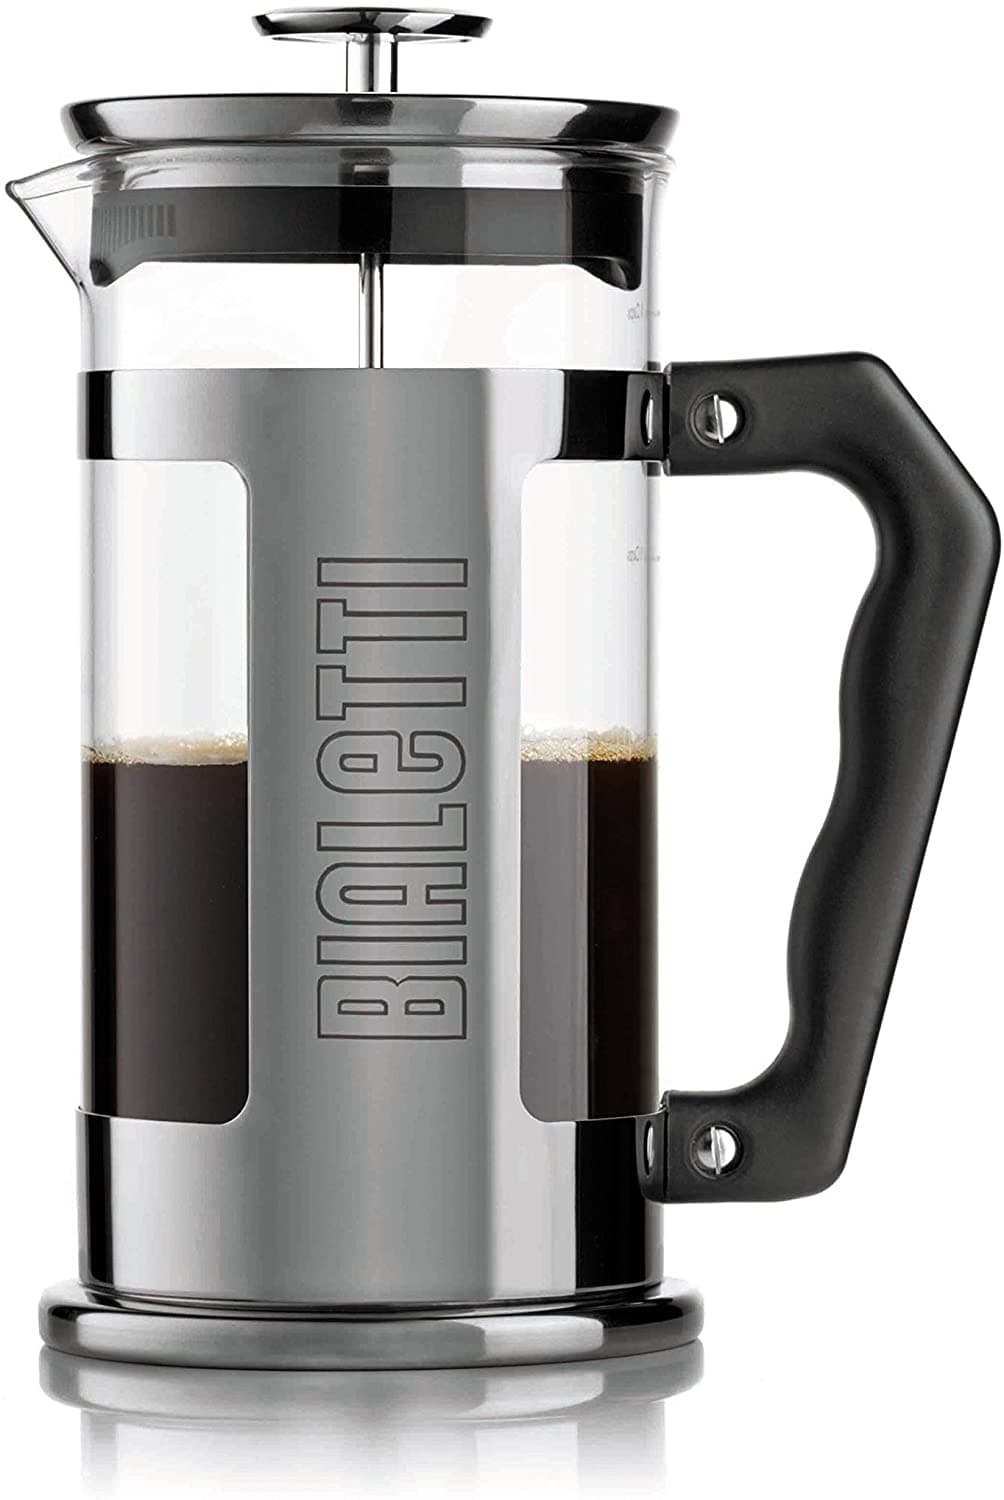 Bialetti Coffee Press Signature Press Coffee Maker - Clear, Black and Silver, 350 ml - 0003180/NW